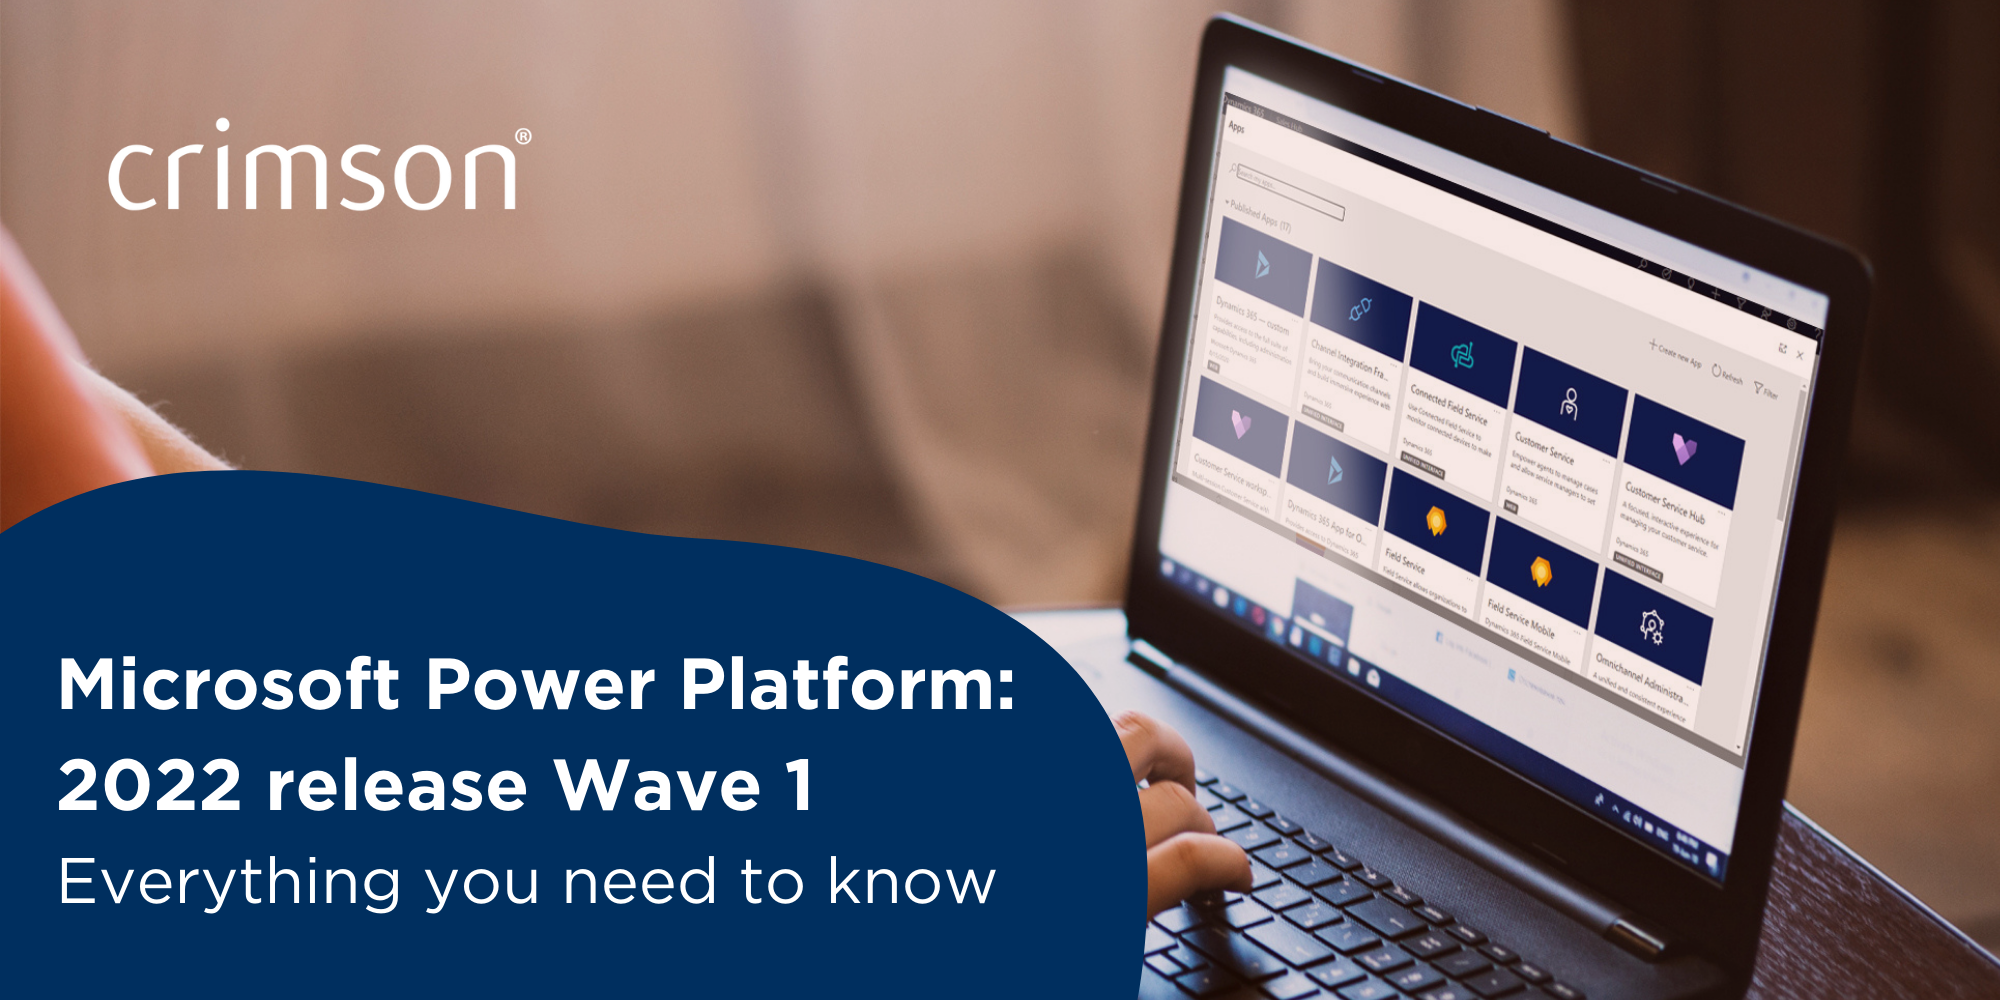 Microsoft's Power Platform 2022 Release Wave 1